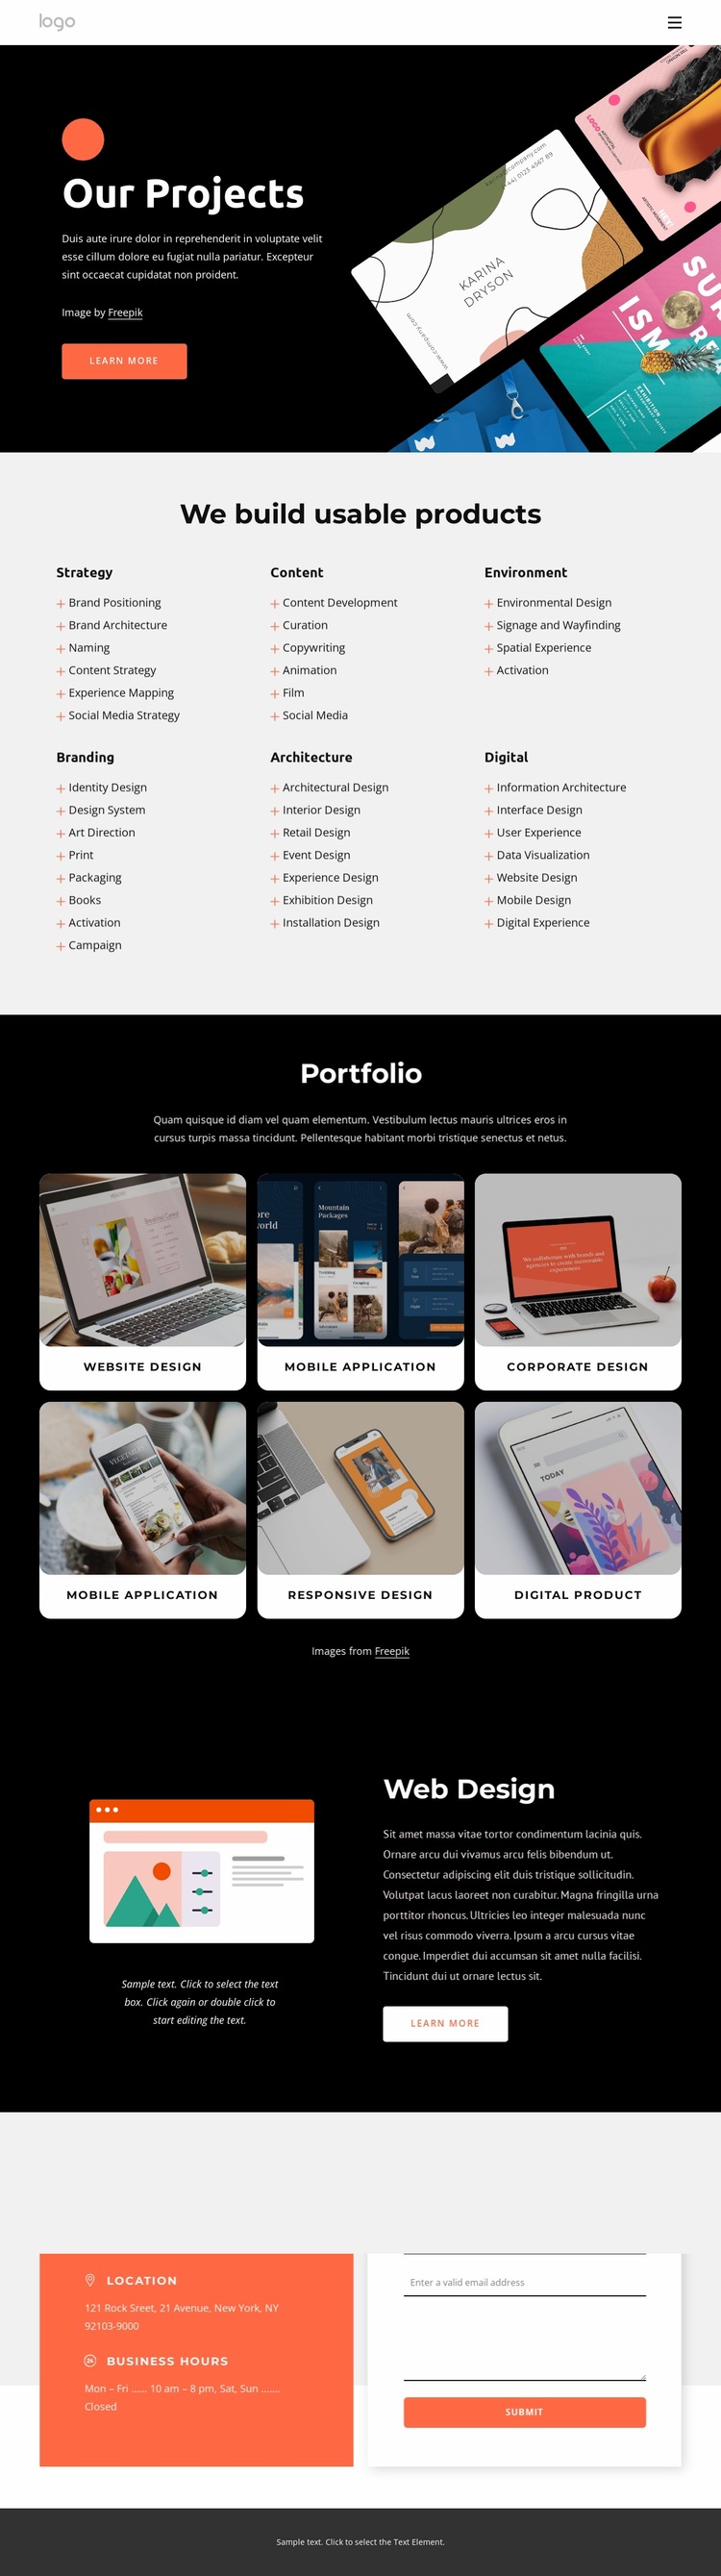 Our creative portfolio Website Design